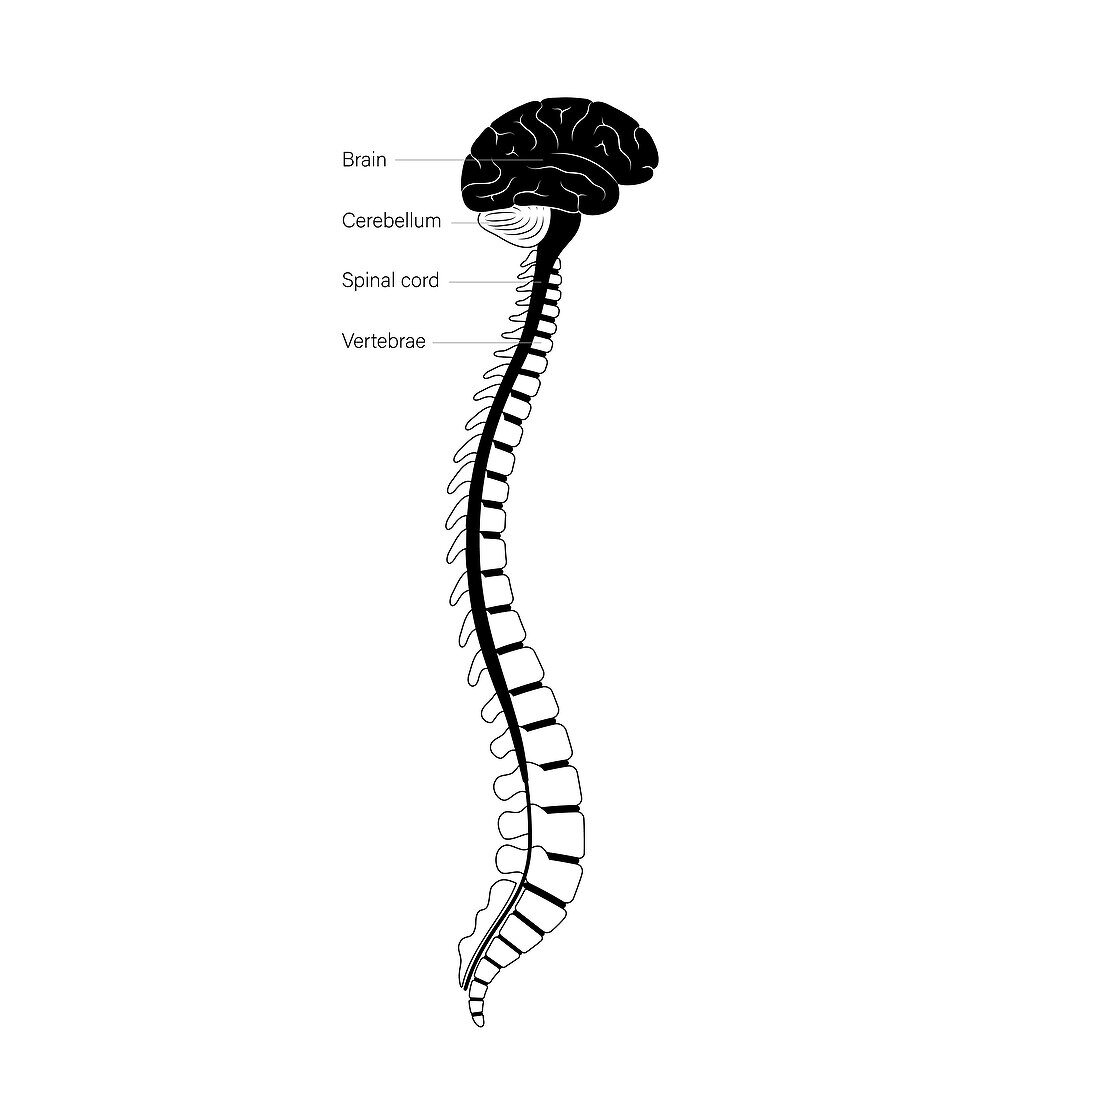 Spinal cord anatomy, illustration